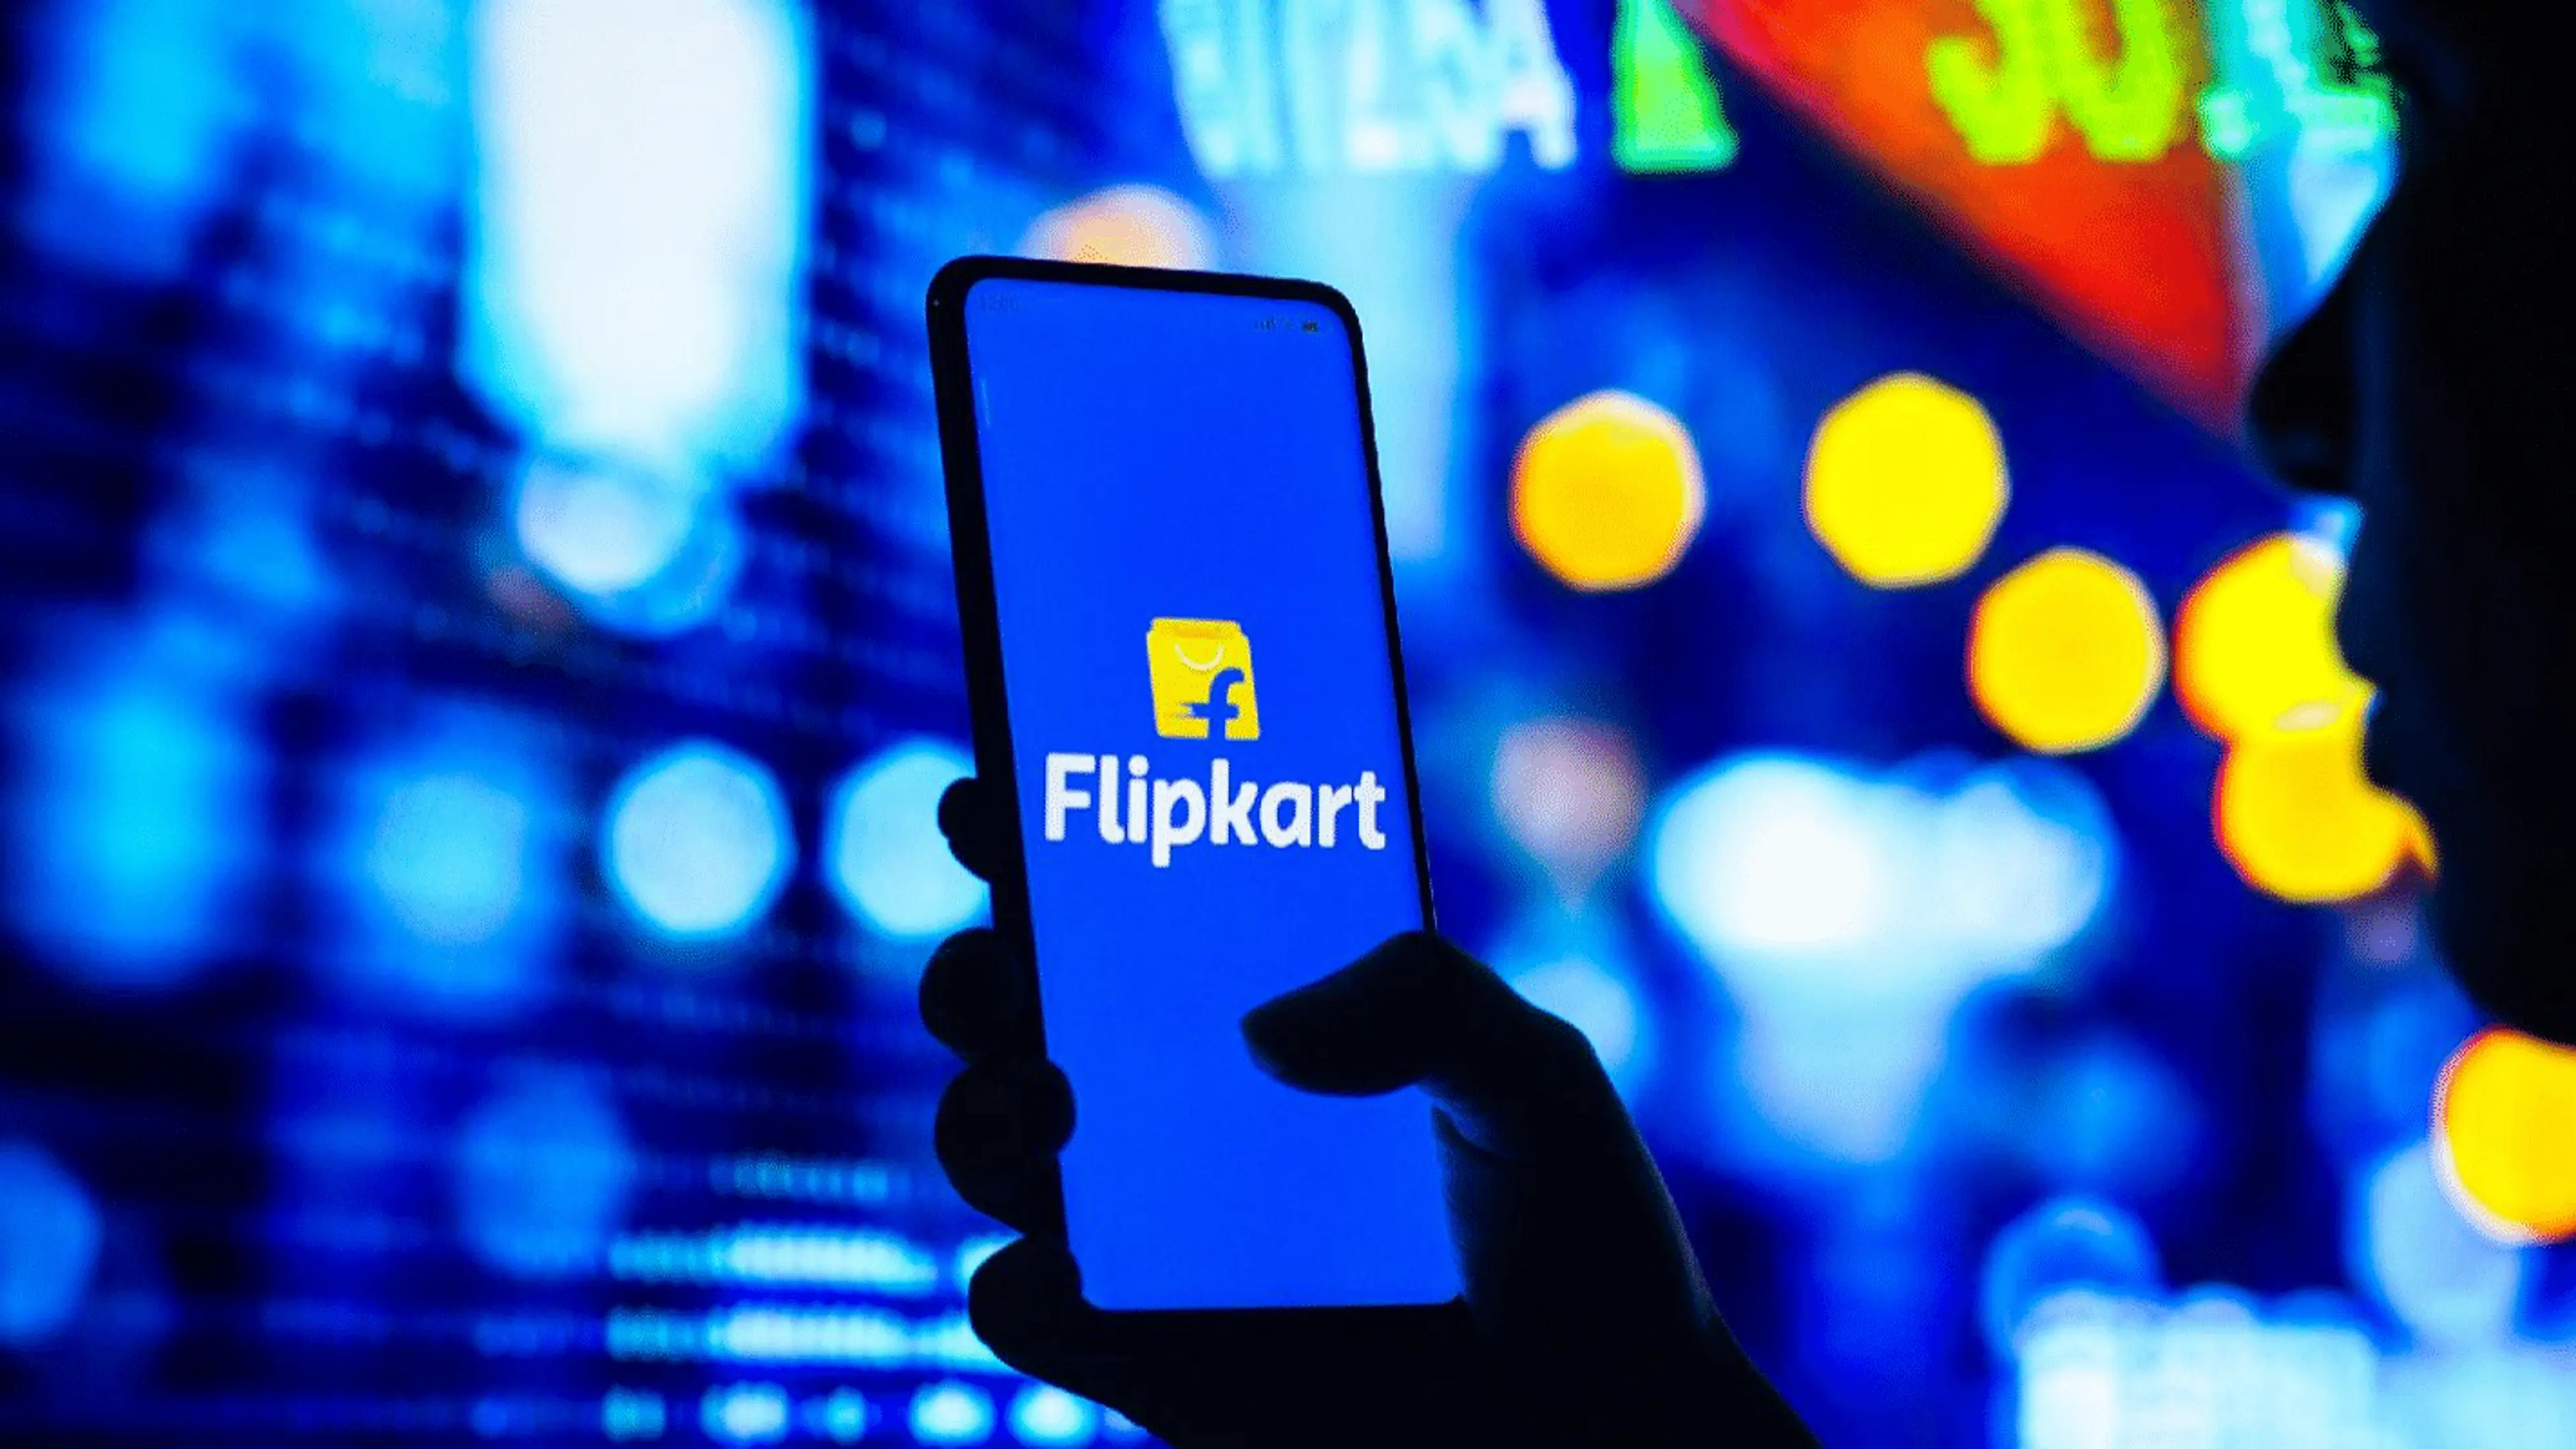 Flipkart launches IRIS to help brands make data-driven decisions